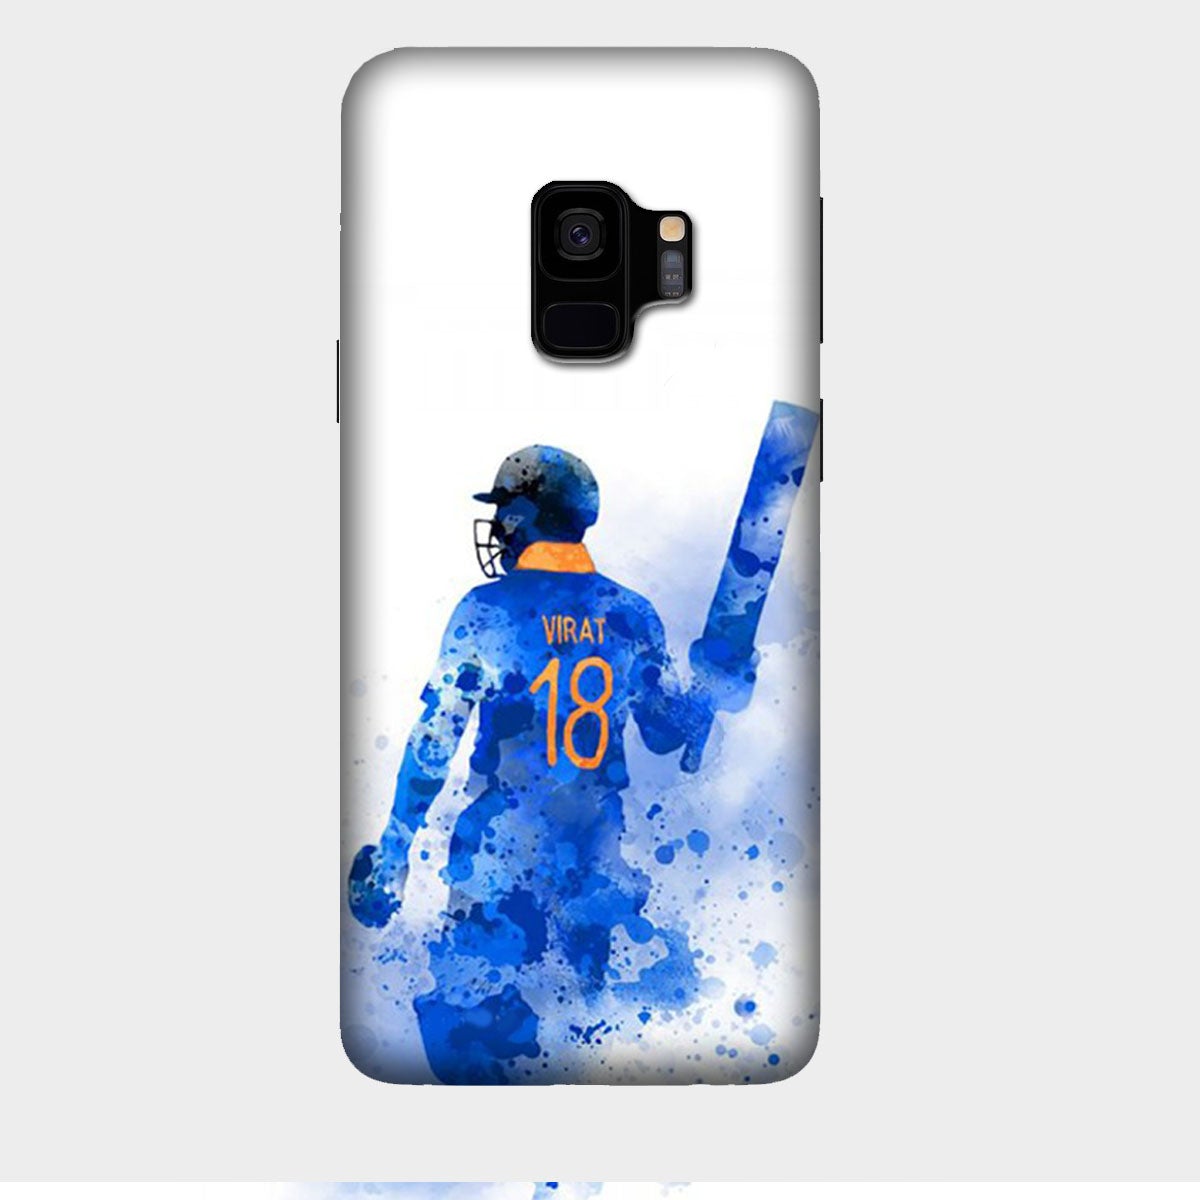 Virat Kohli - Team India - Mobile Phone Cover - Hard Case - Samsung - Samsung